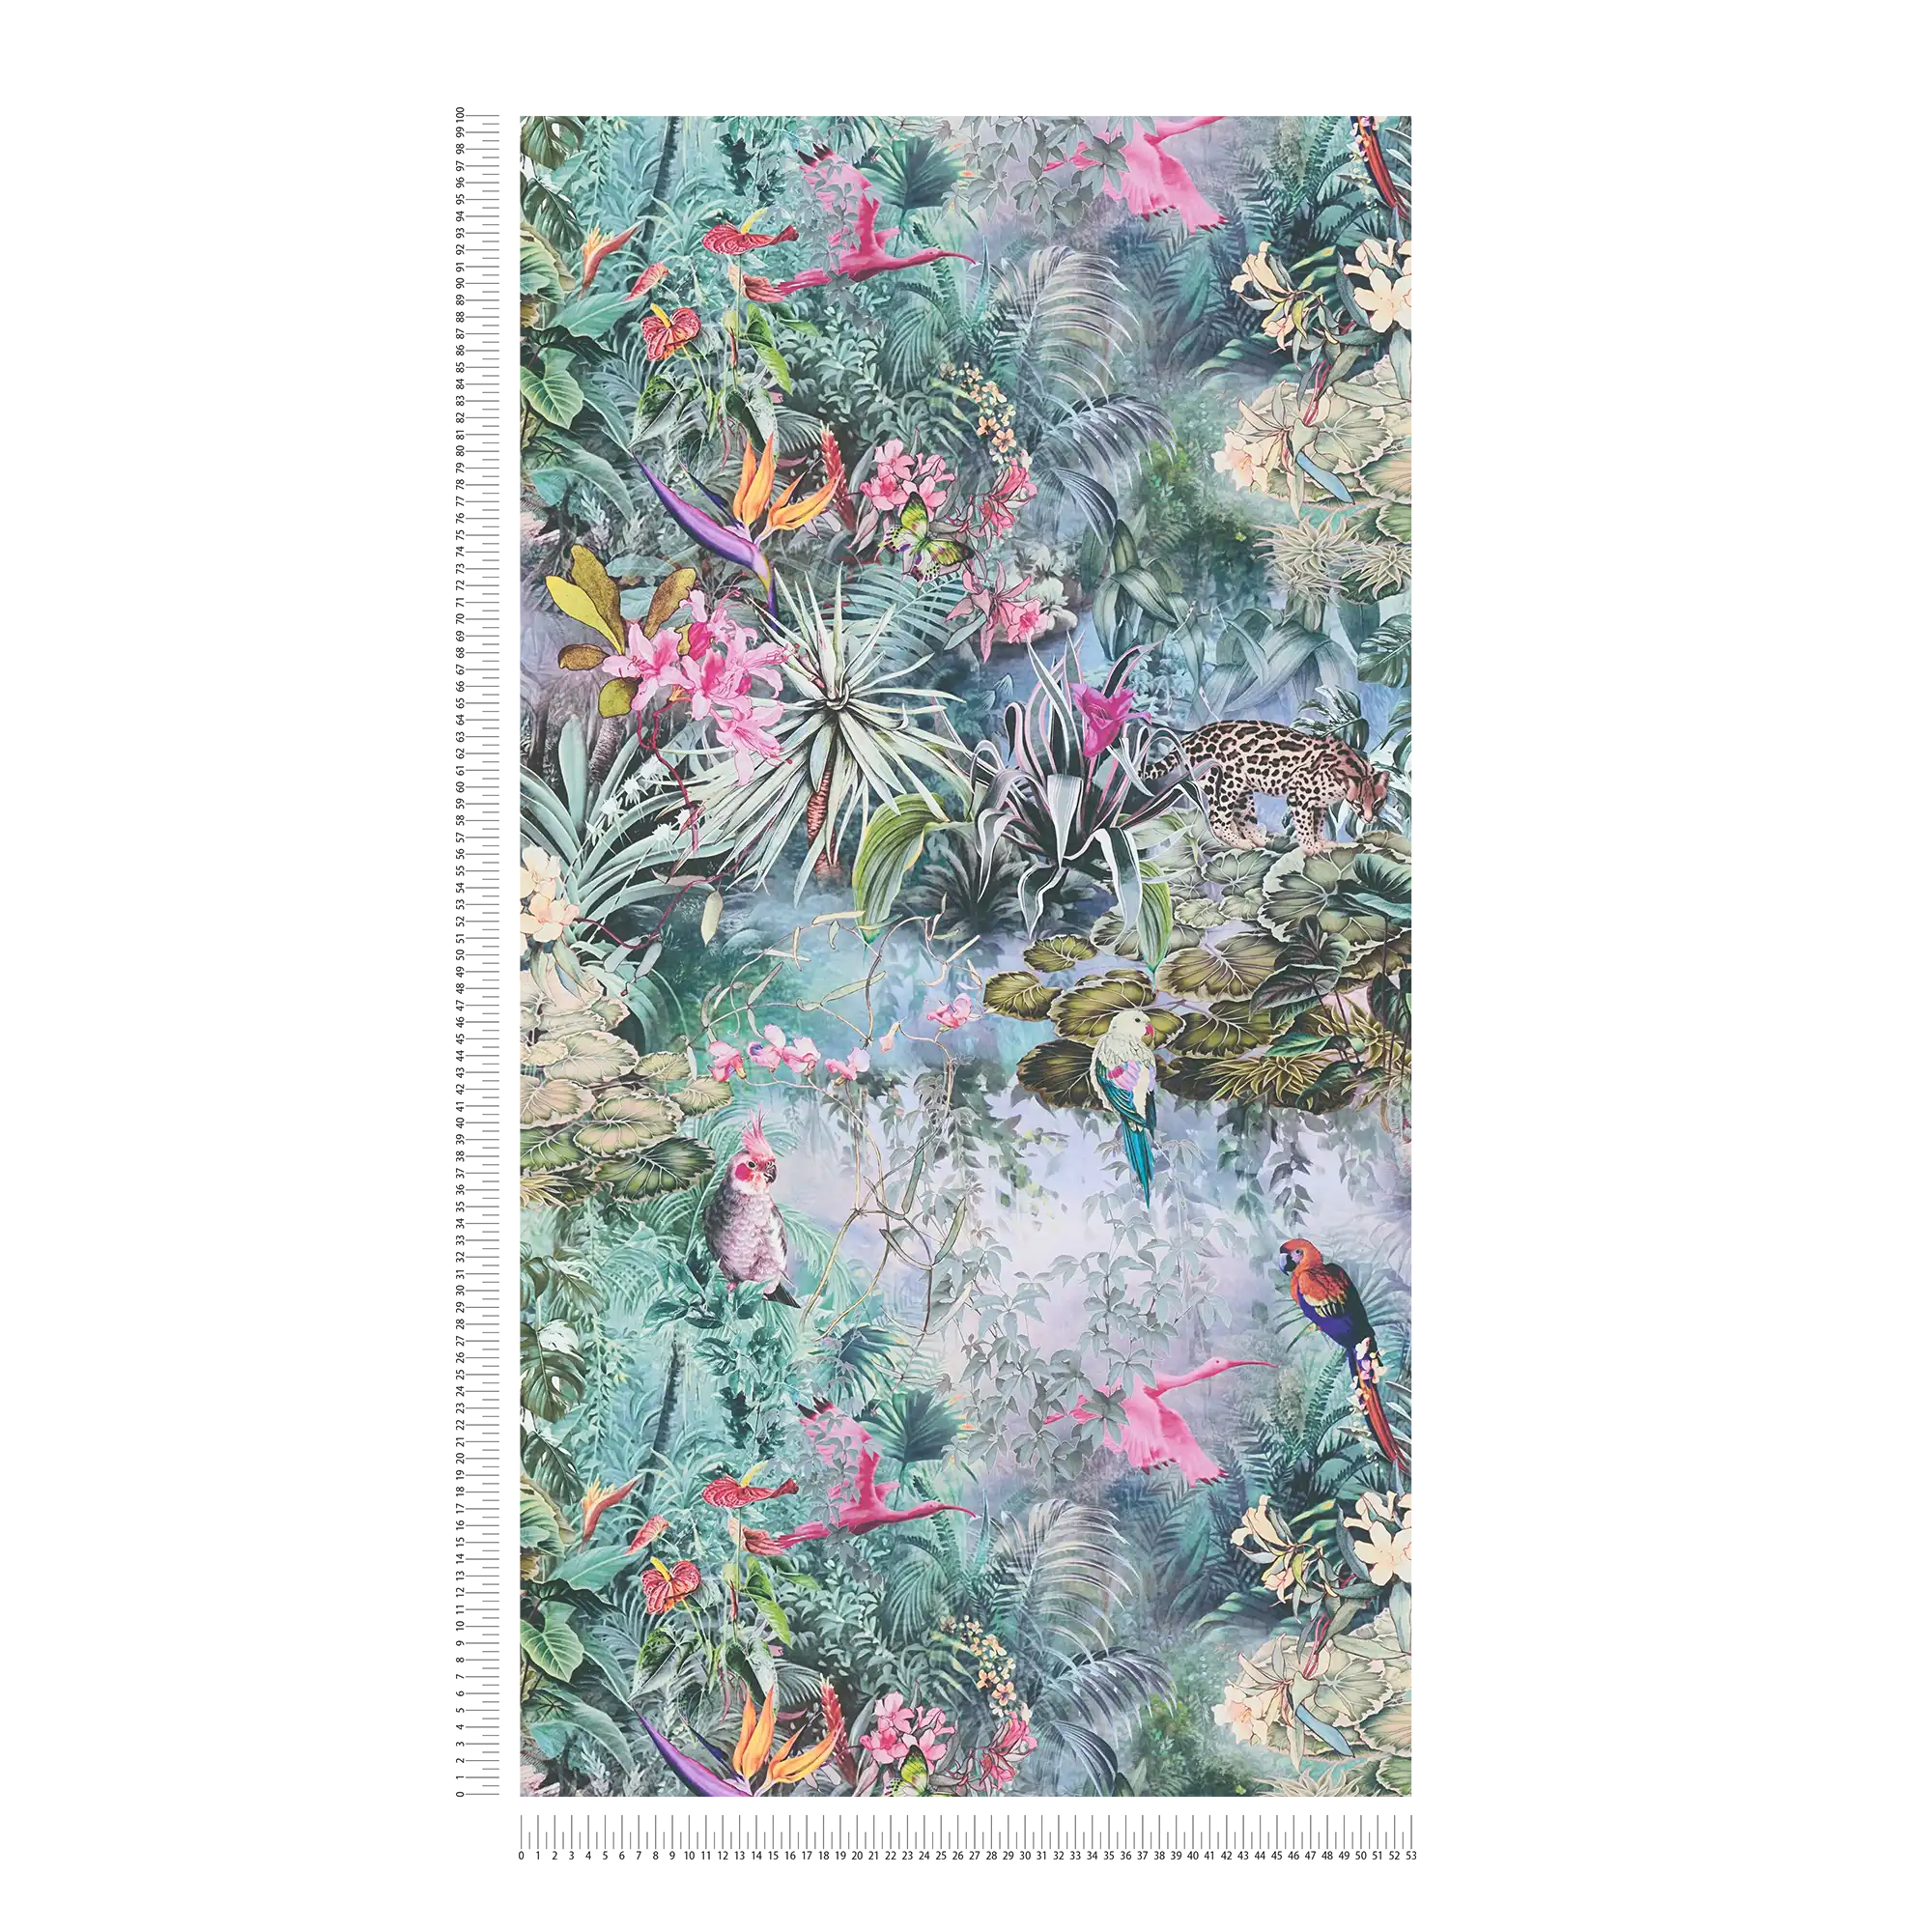             Jungle wallpaper animals & plants in watercolour look
        